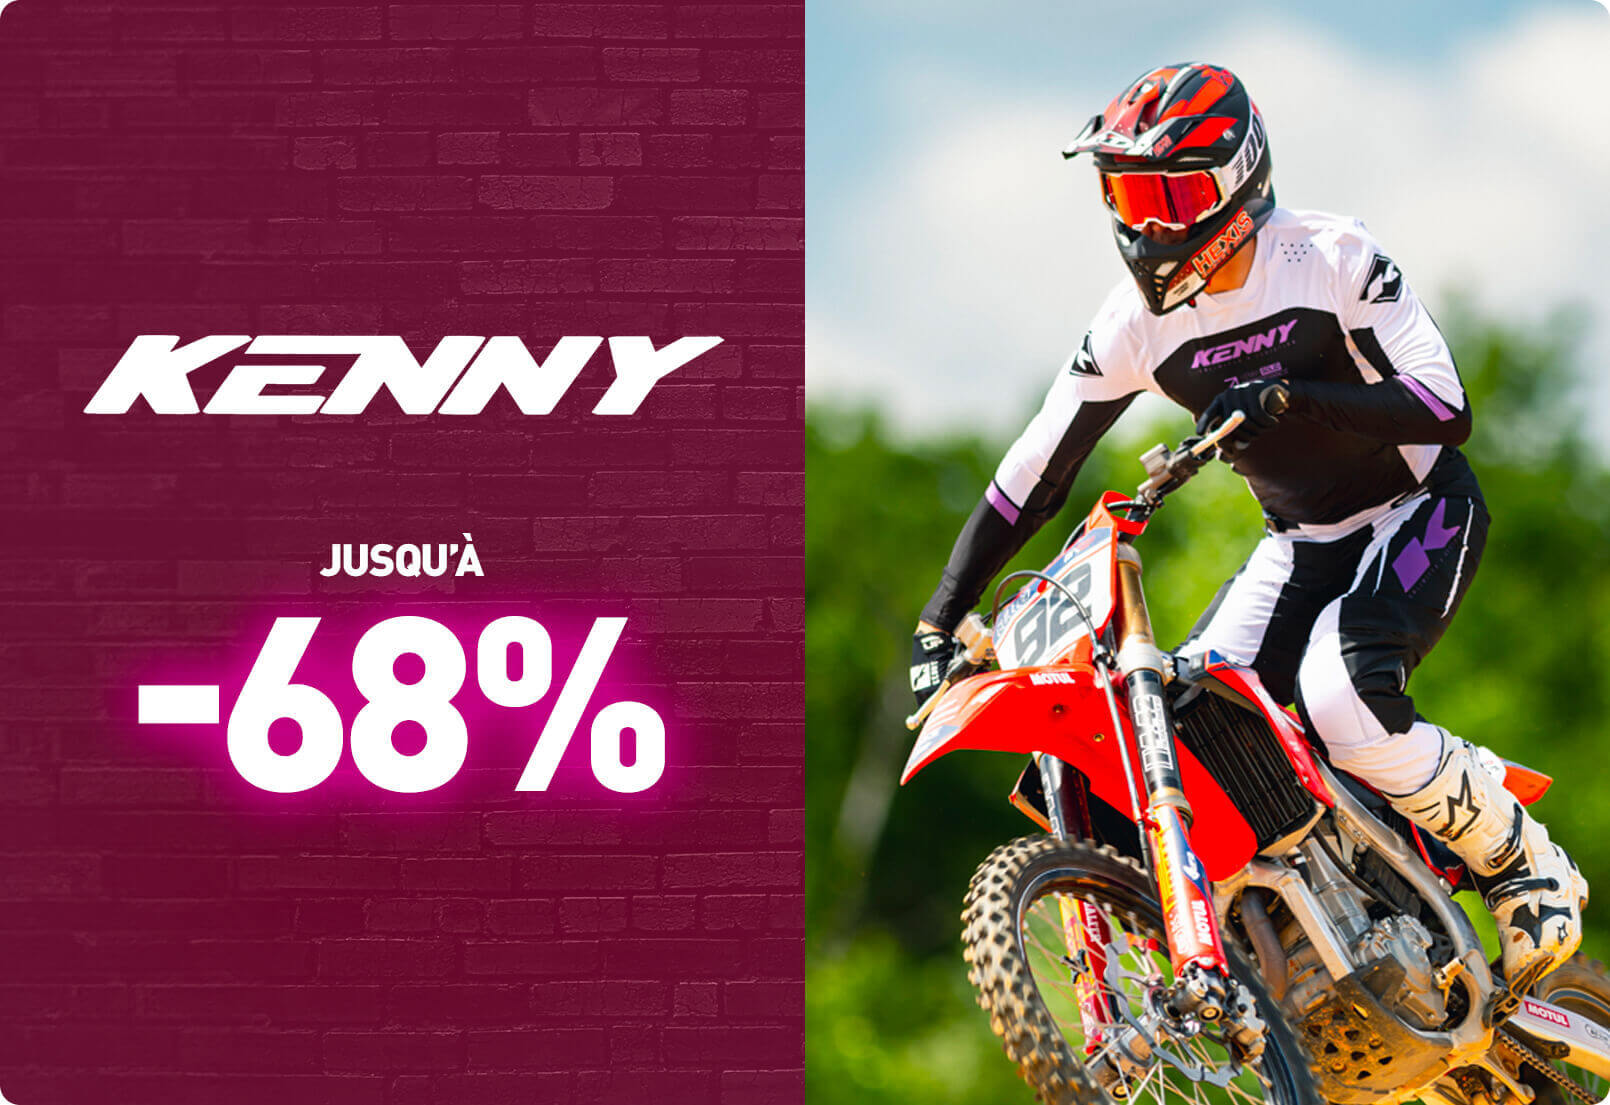 Kenny jusqu'à -68%